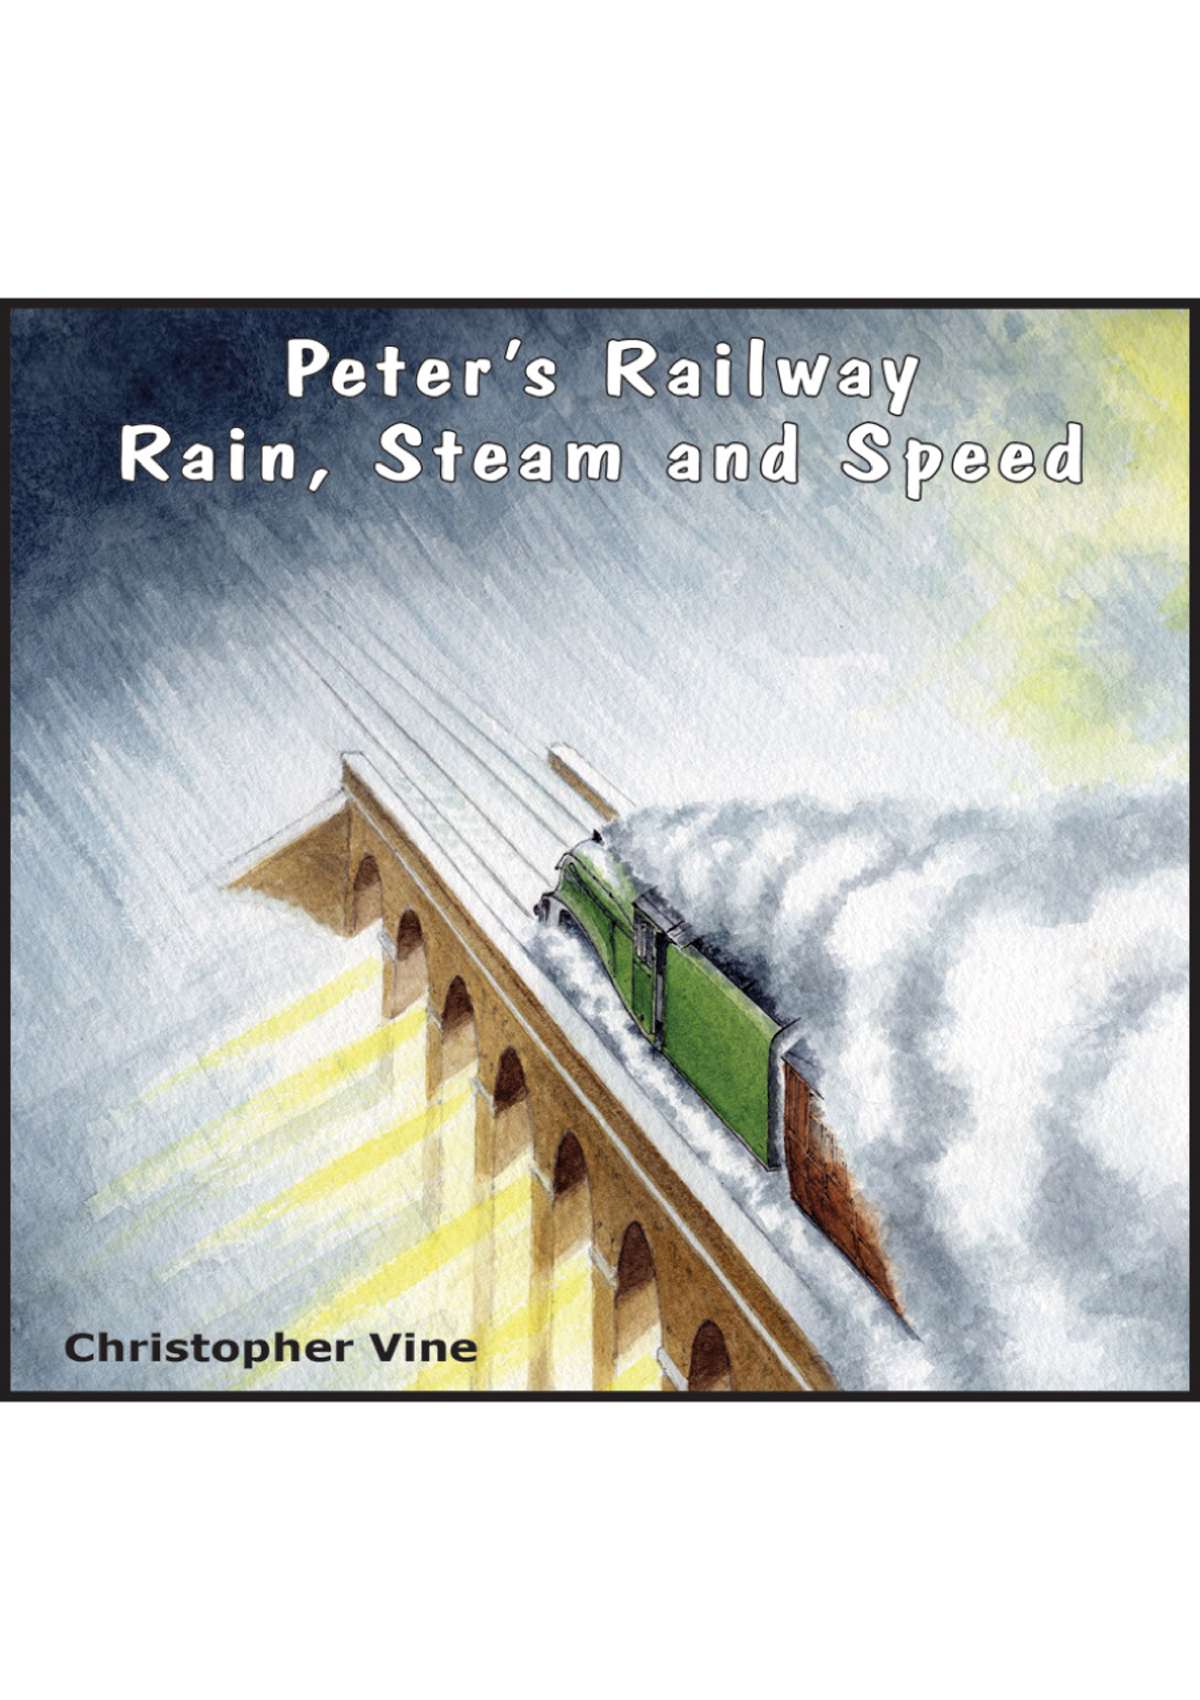 Peter's Railway - Rain, Steam and Speed